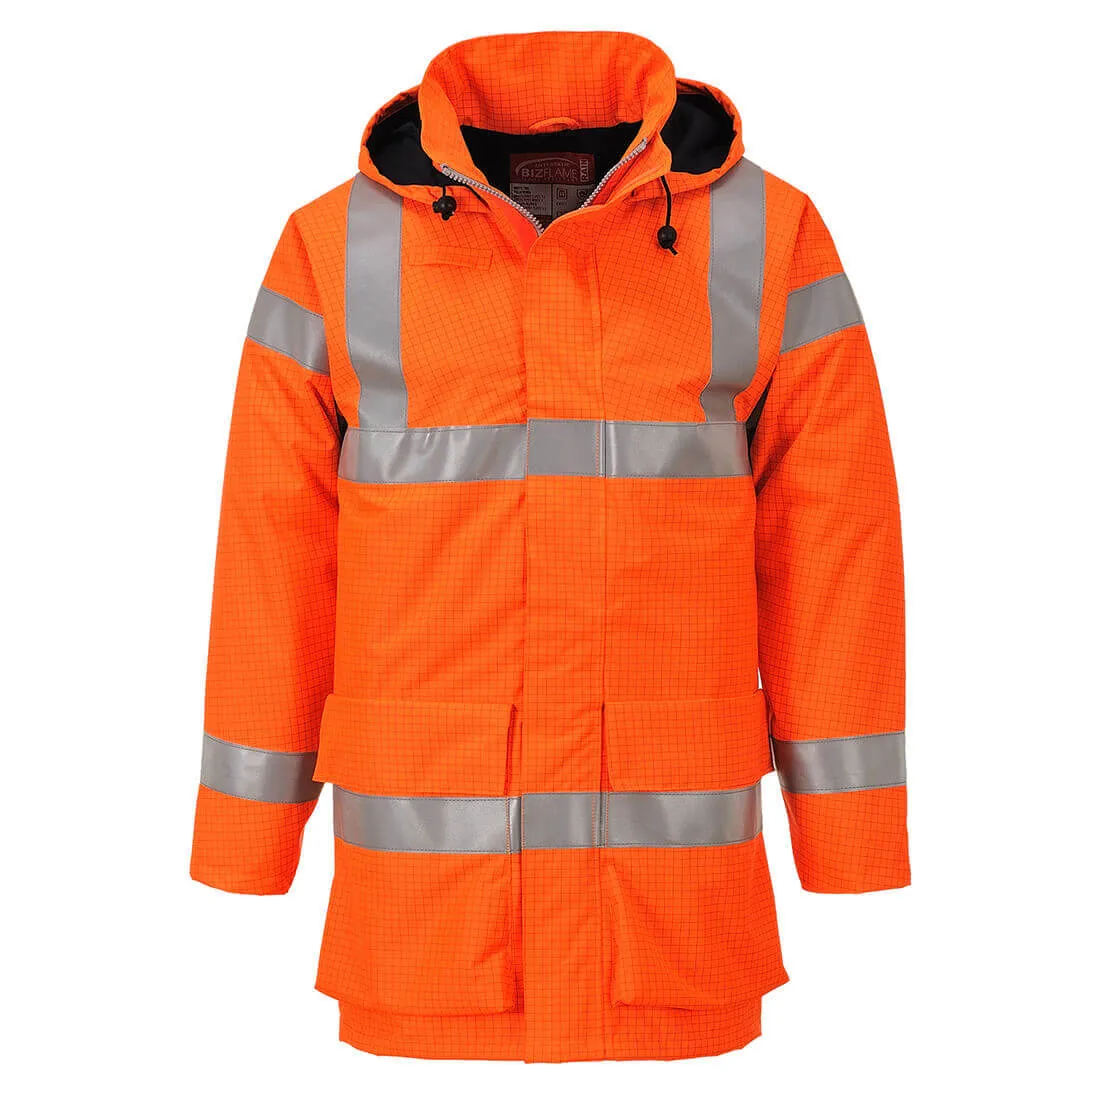 Biz Flame Hi Vis Flame Resistant Rain Multi Lite Jacket - Orange, 3XL